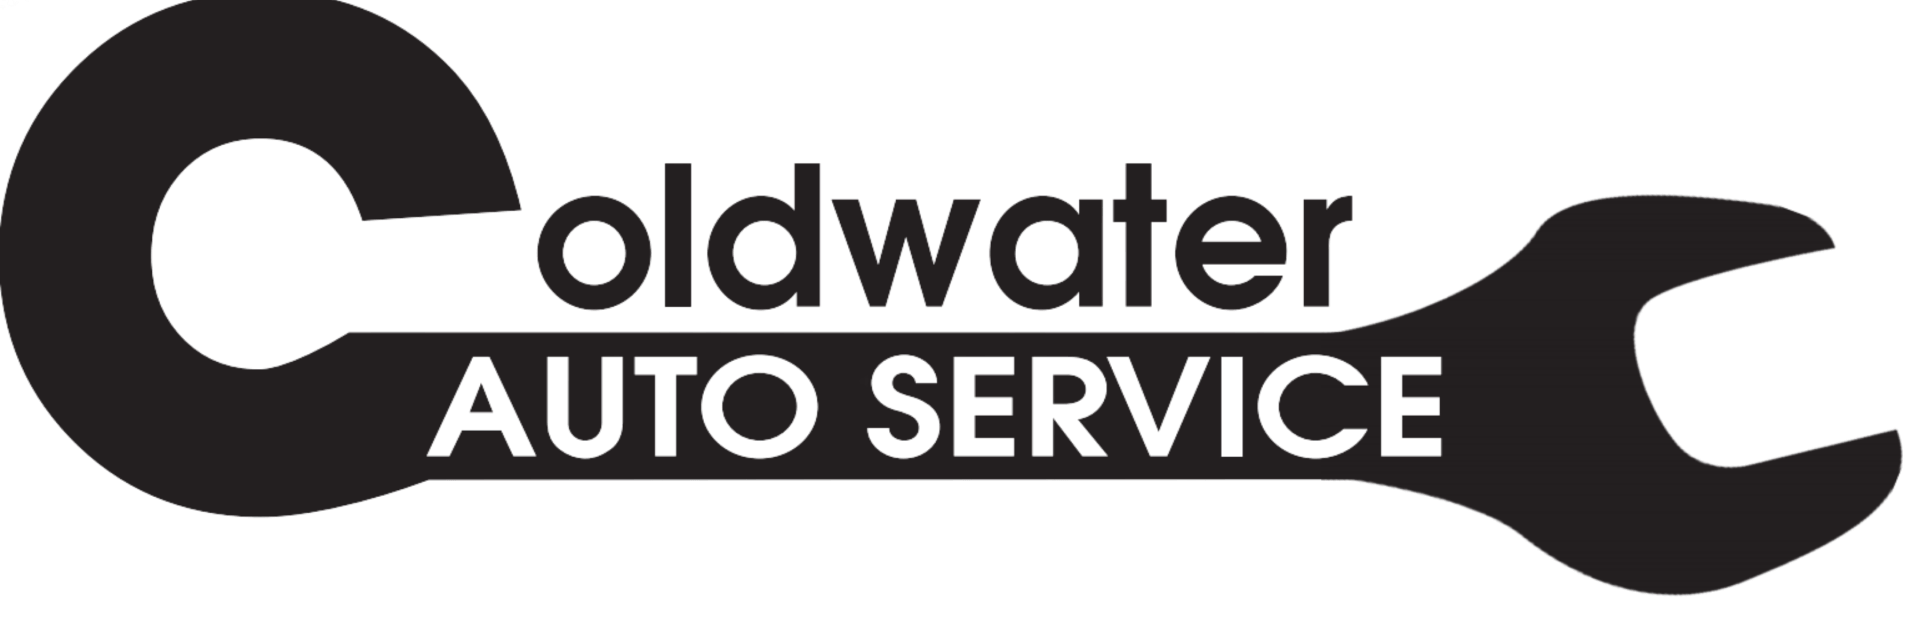 Coldwater Auto Service-Logo